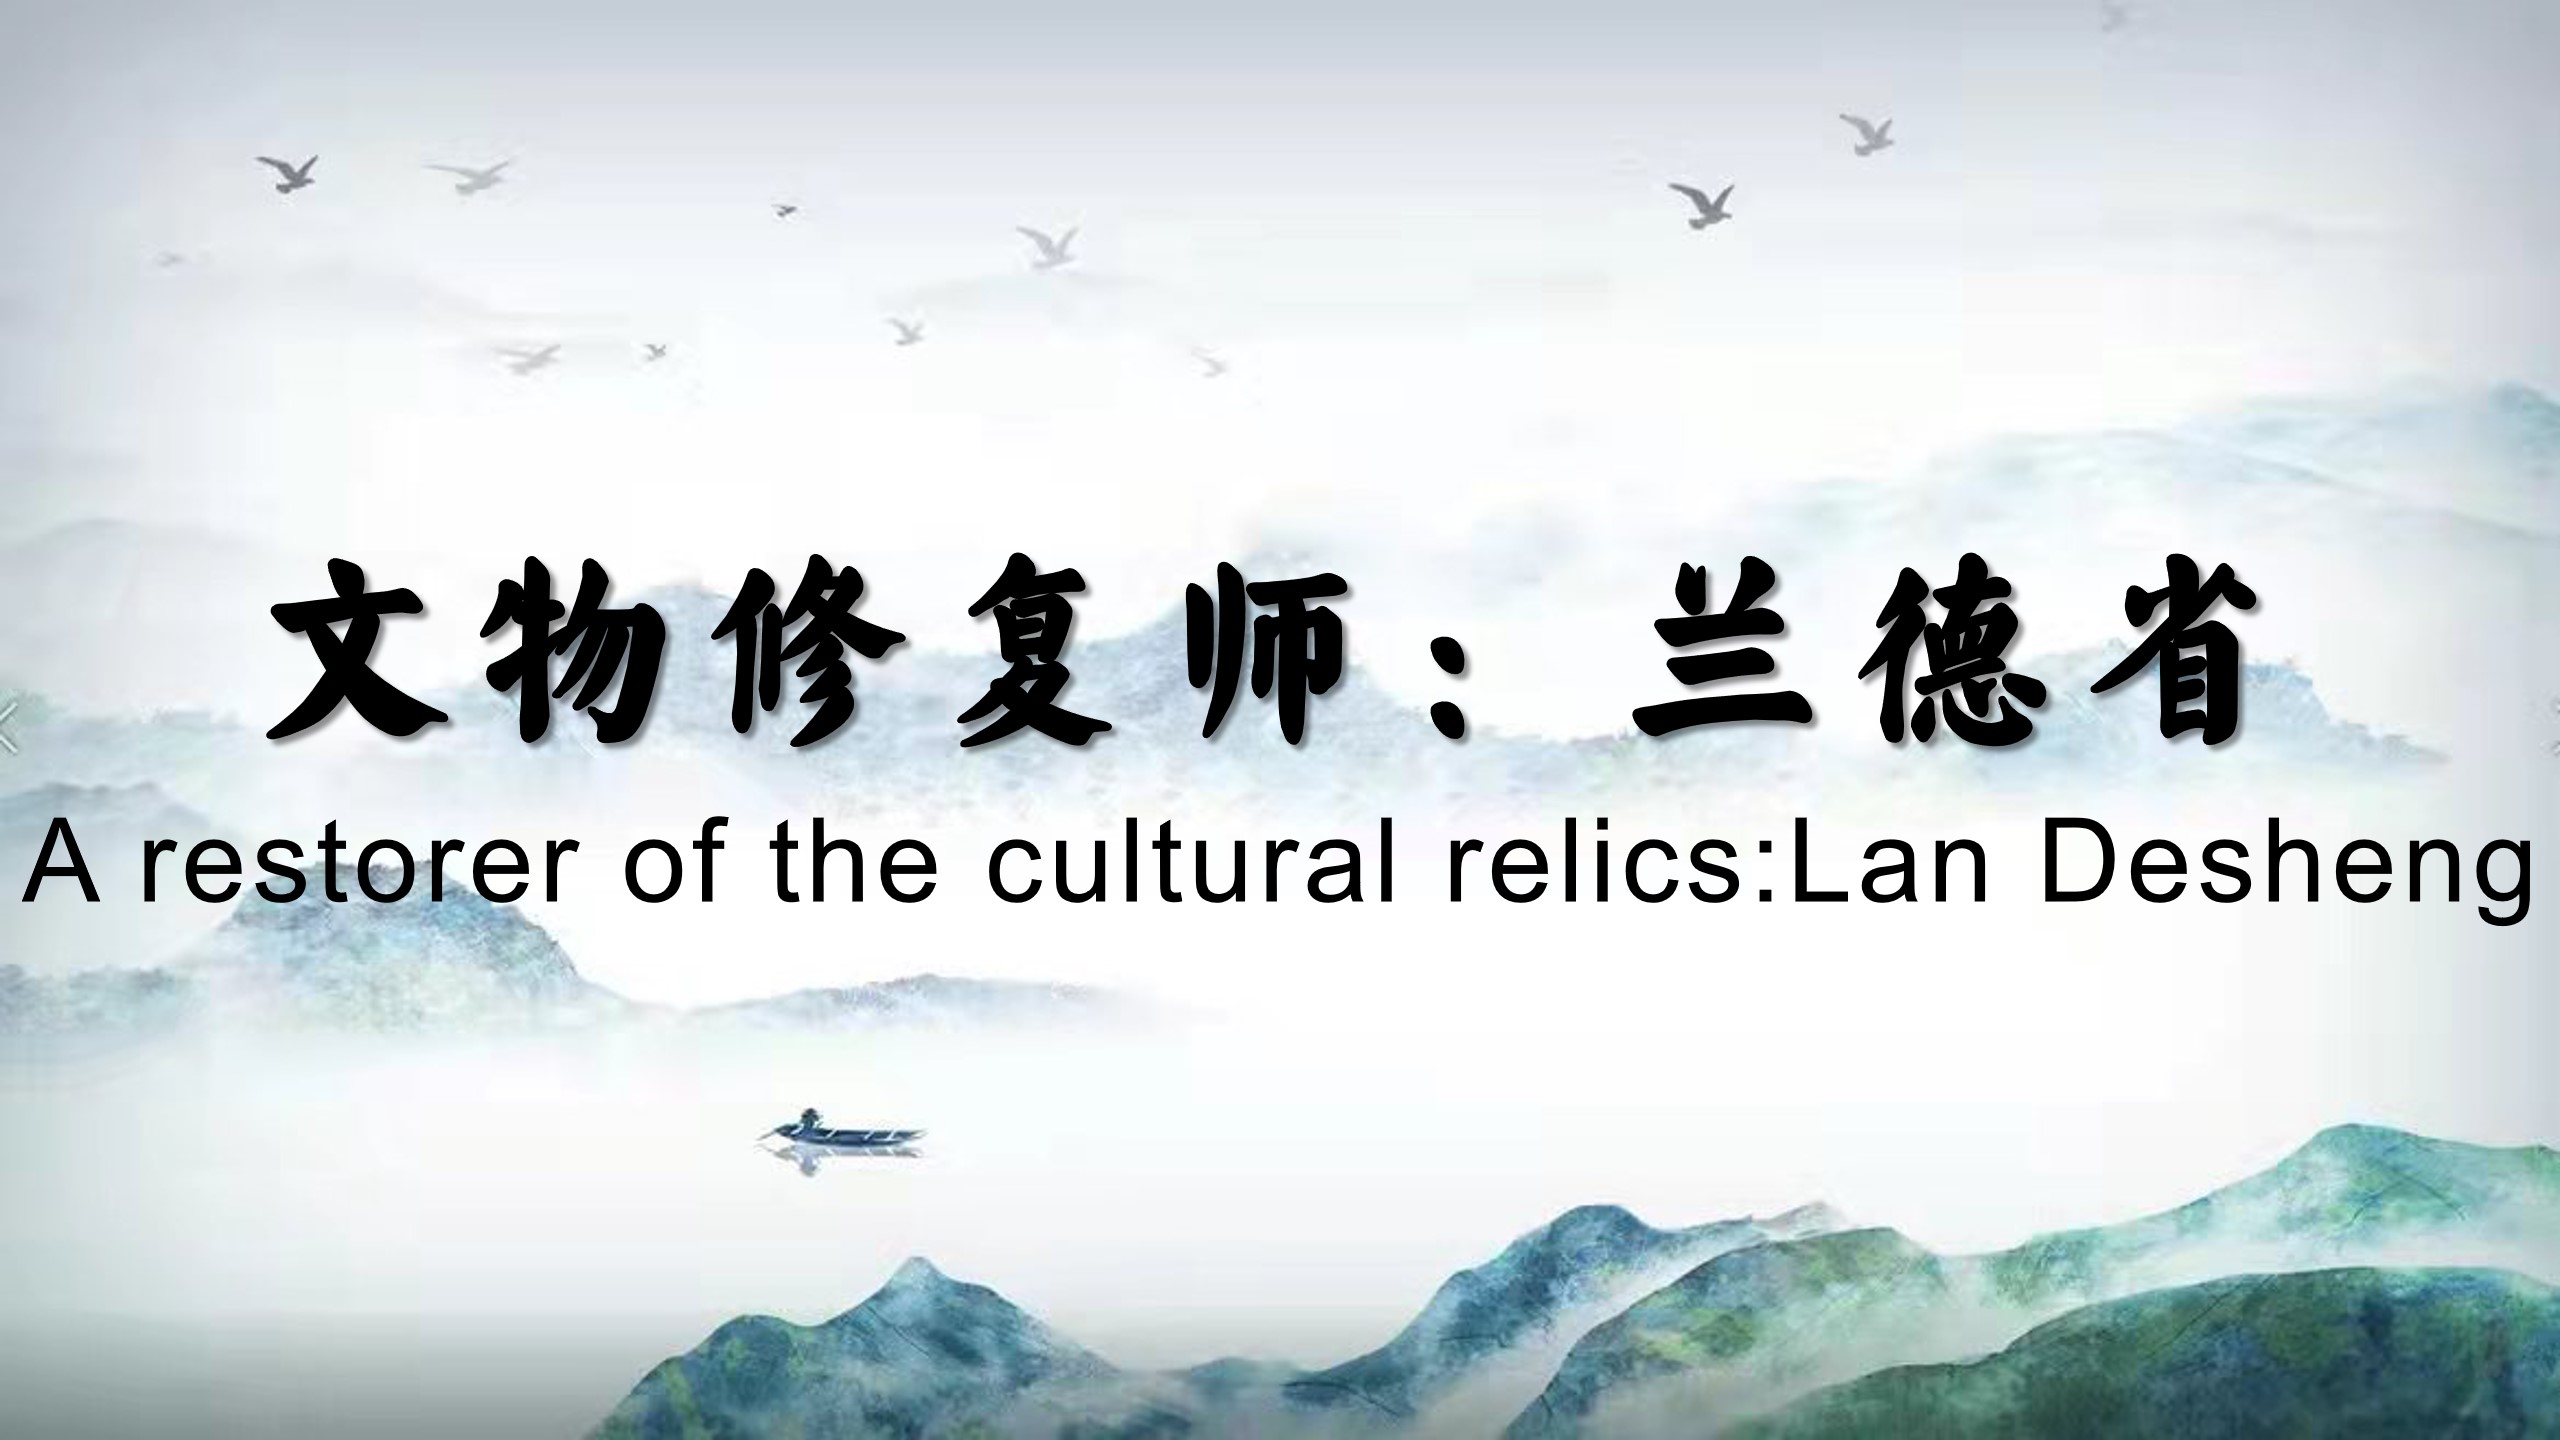 A restorer of the cultural relics:Lan Desheng